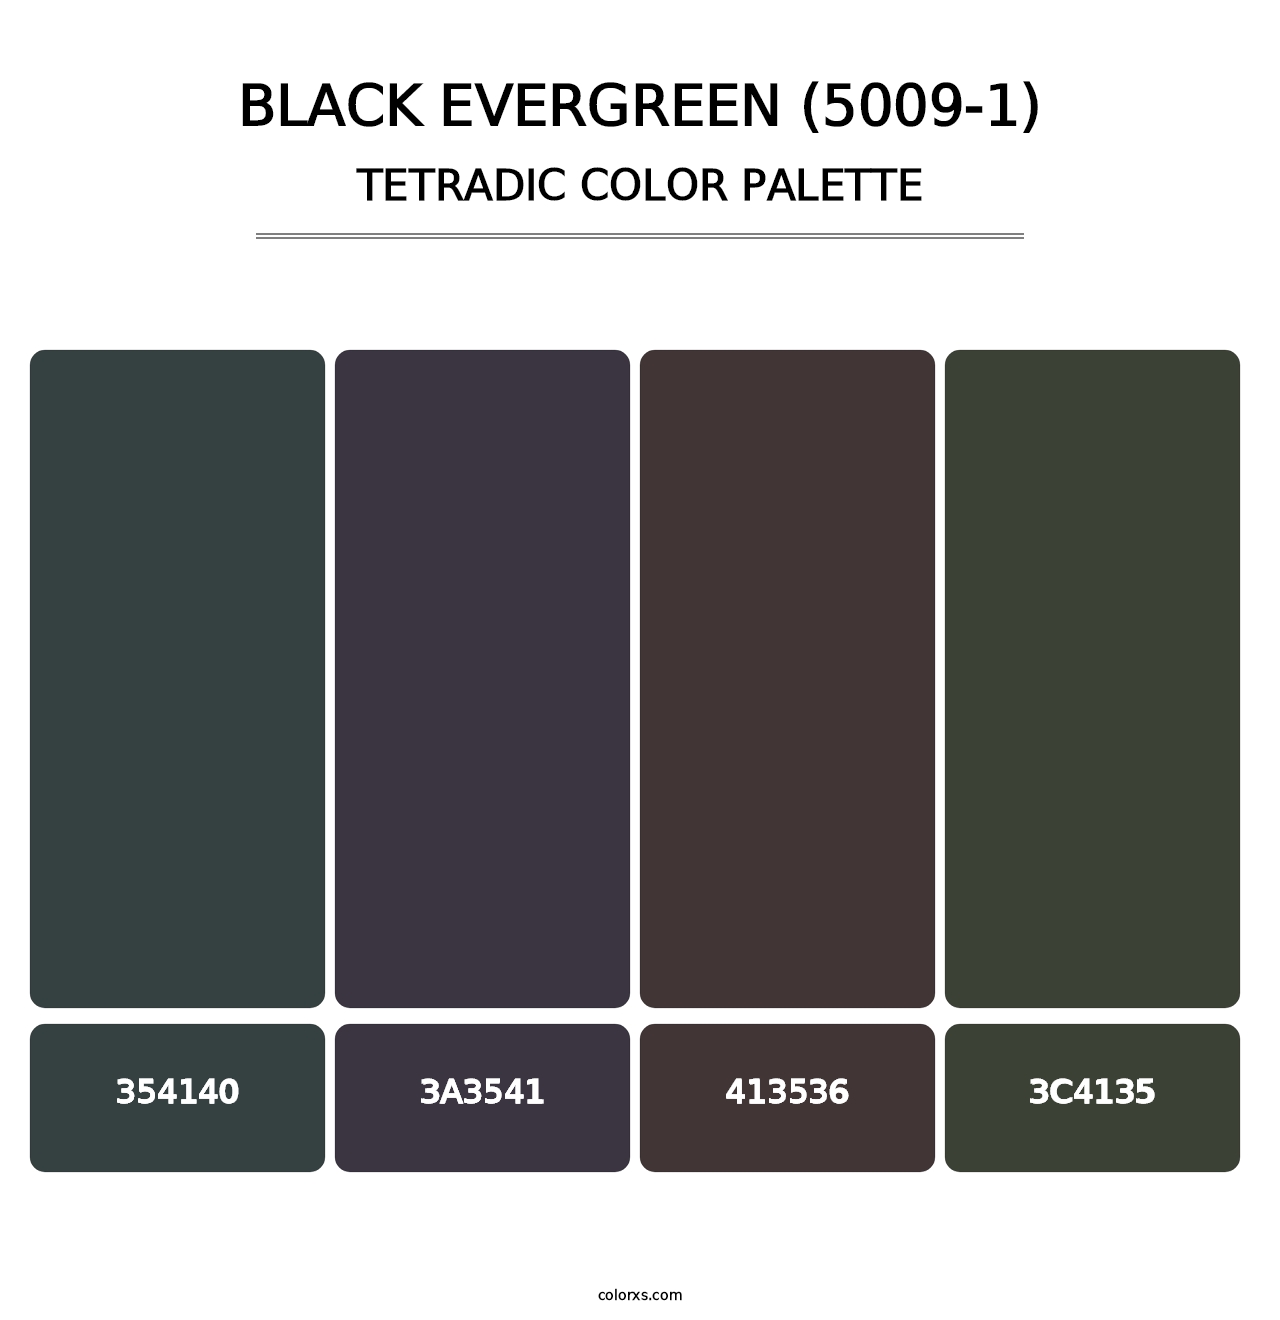 Black Evergreen (5009-1) - Tetradic Color Palette